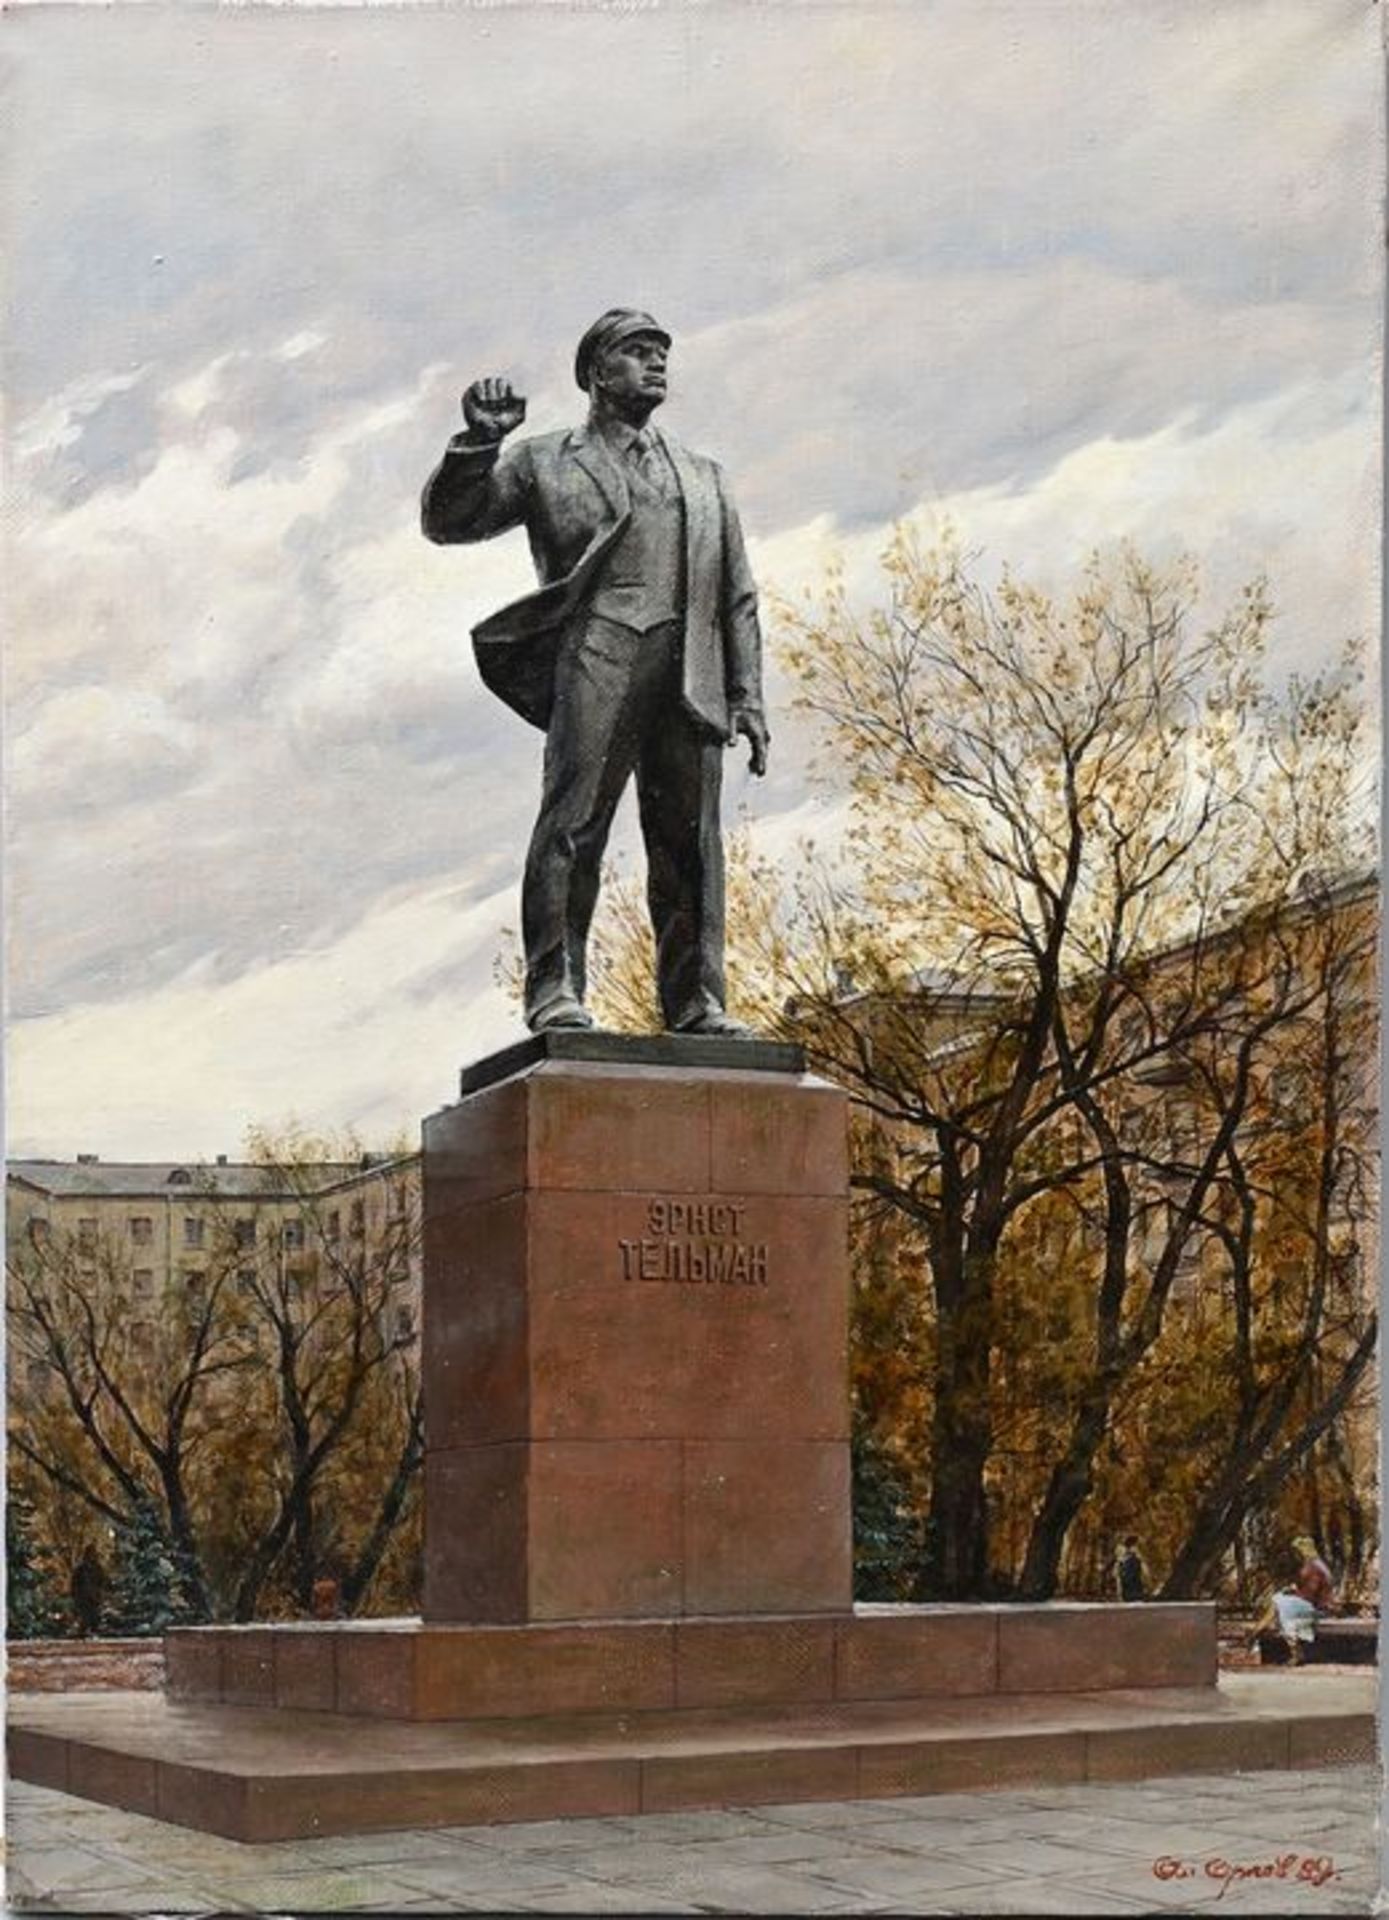 Sowjetischer Maler: Ernst-Thälmann-Denkmal/ memorial for Ernst Thälmann